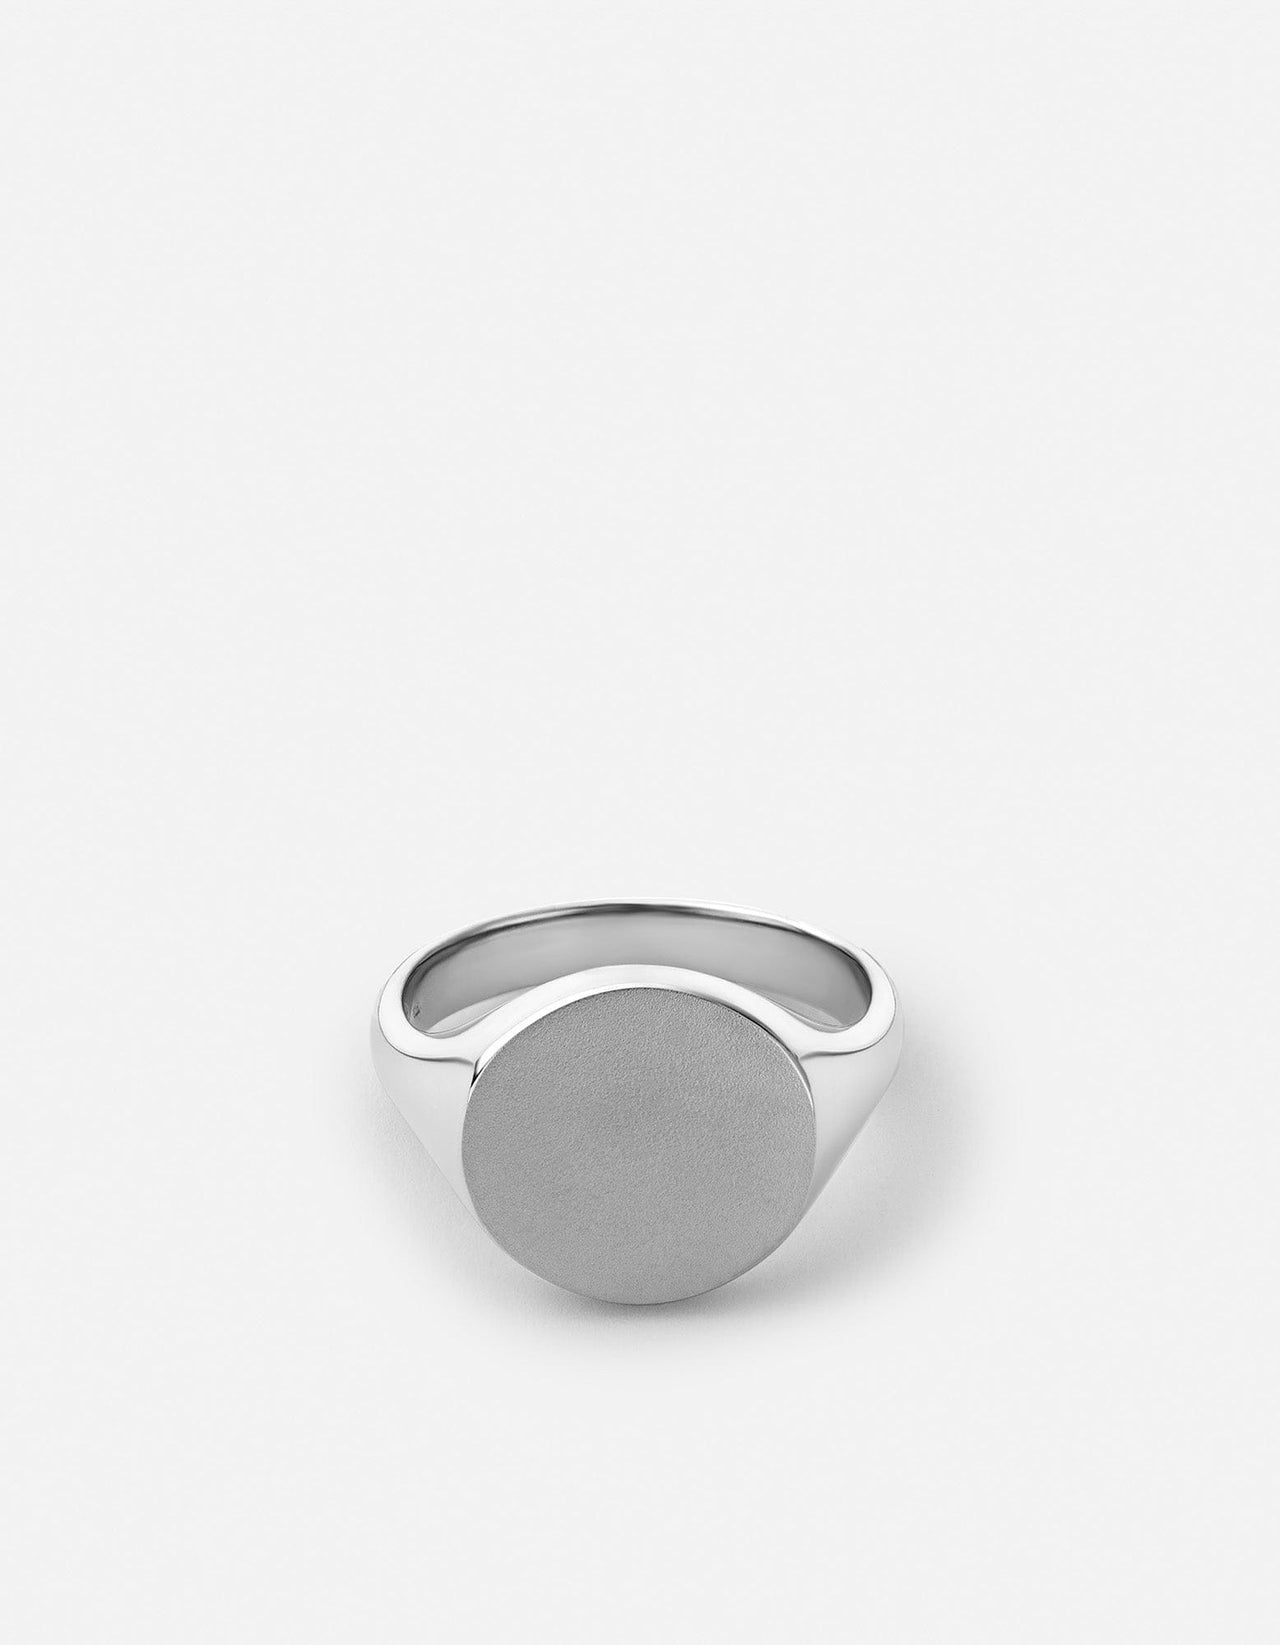 David Yurman Streamline Signet Ring in Sterling Silver with Black Onyx |  Lee Michaels Fine Jewelry store